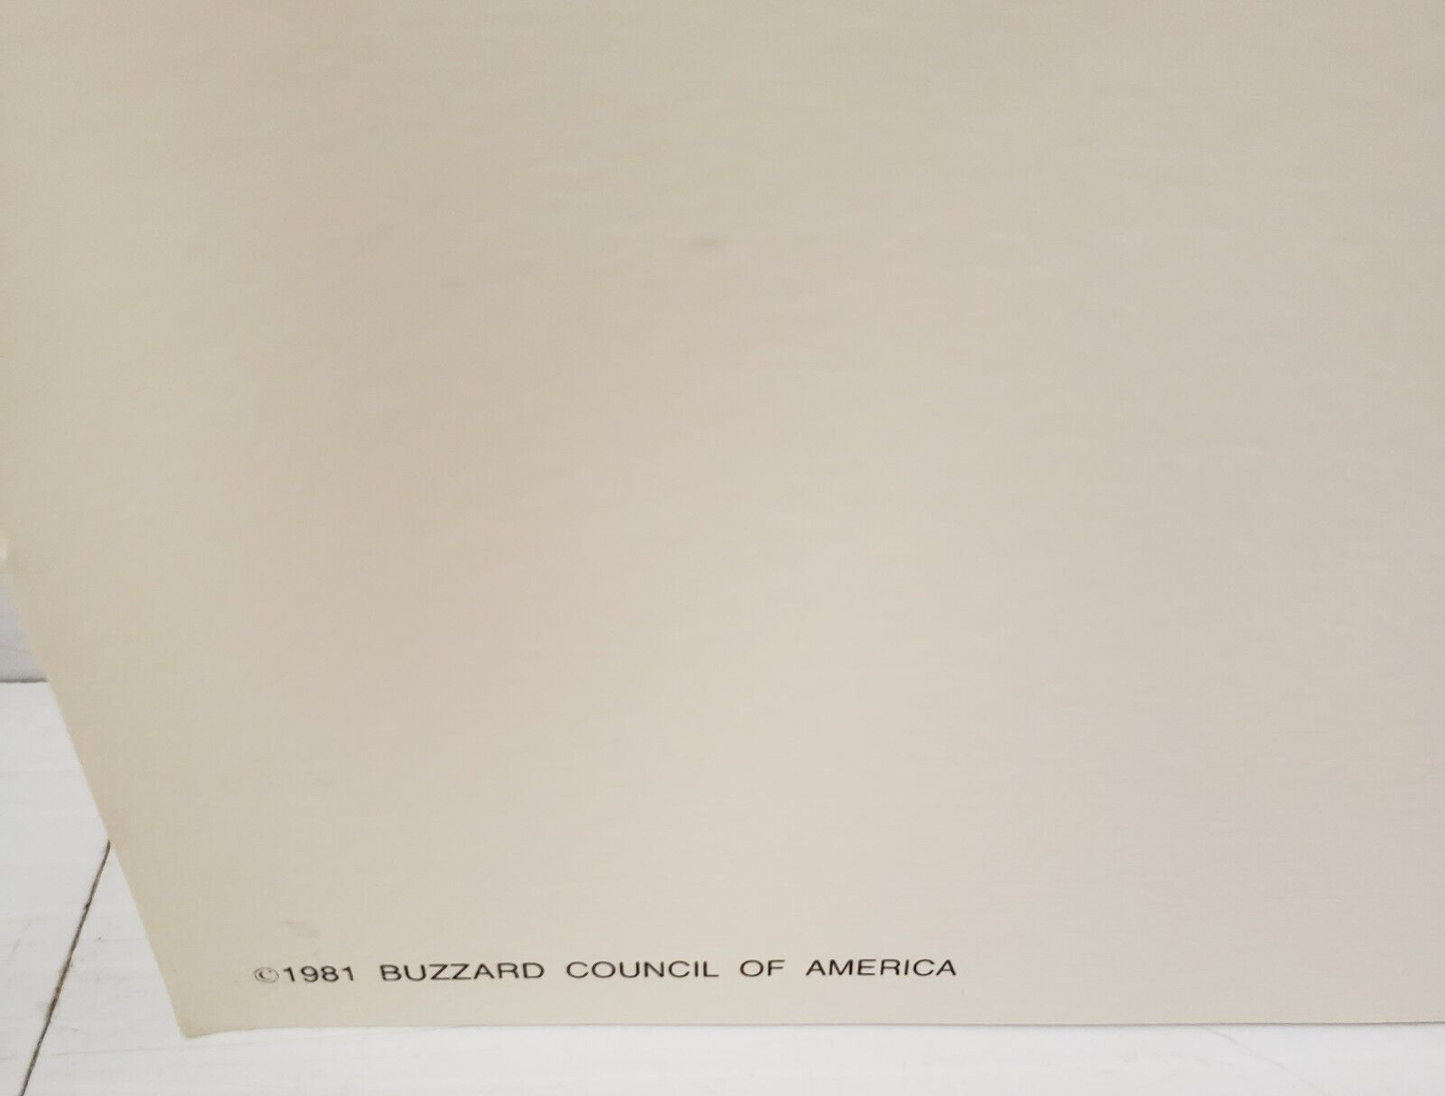 (I-34660) Buzzard Council Of America 1981 By Robert K Abbett Print